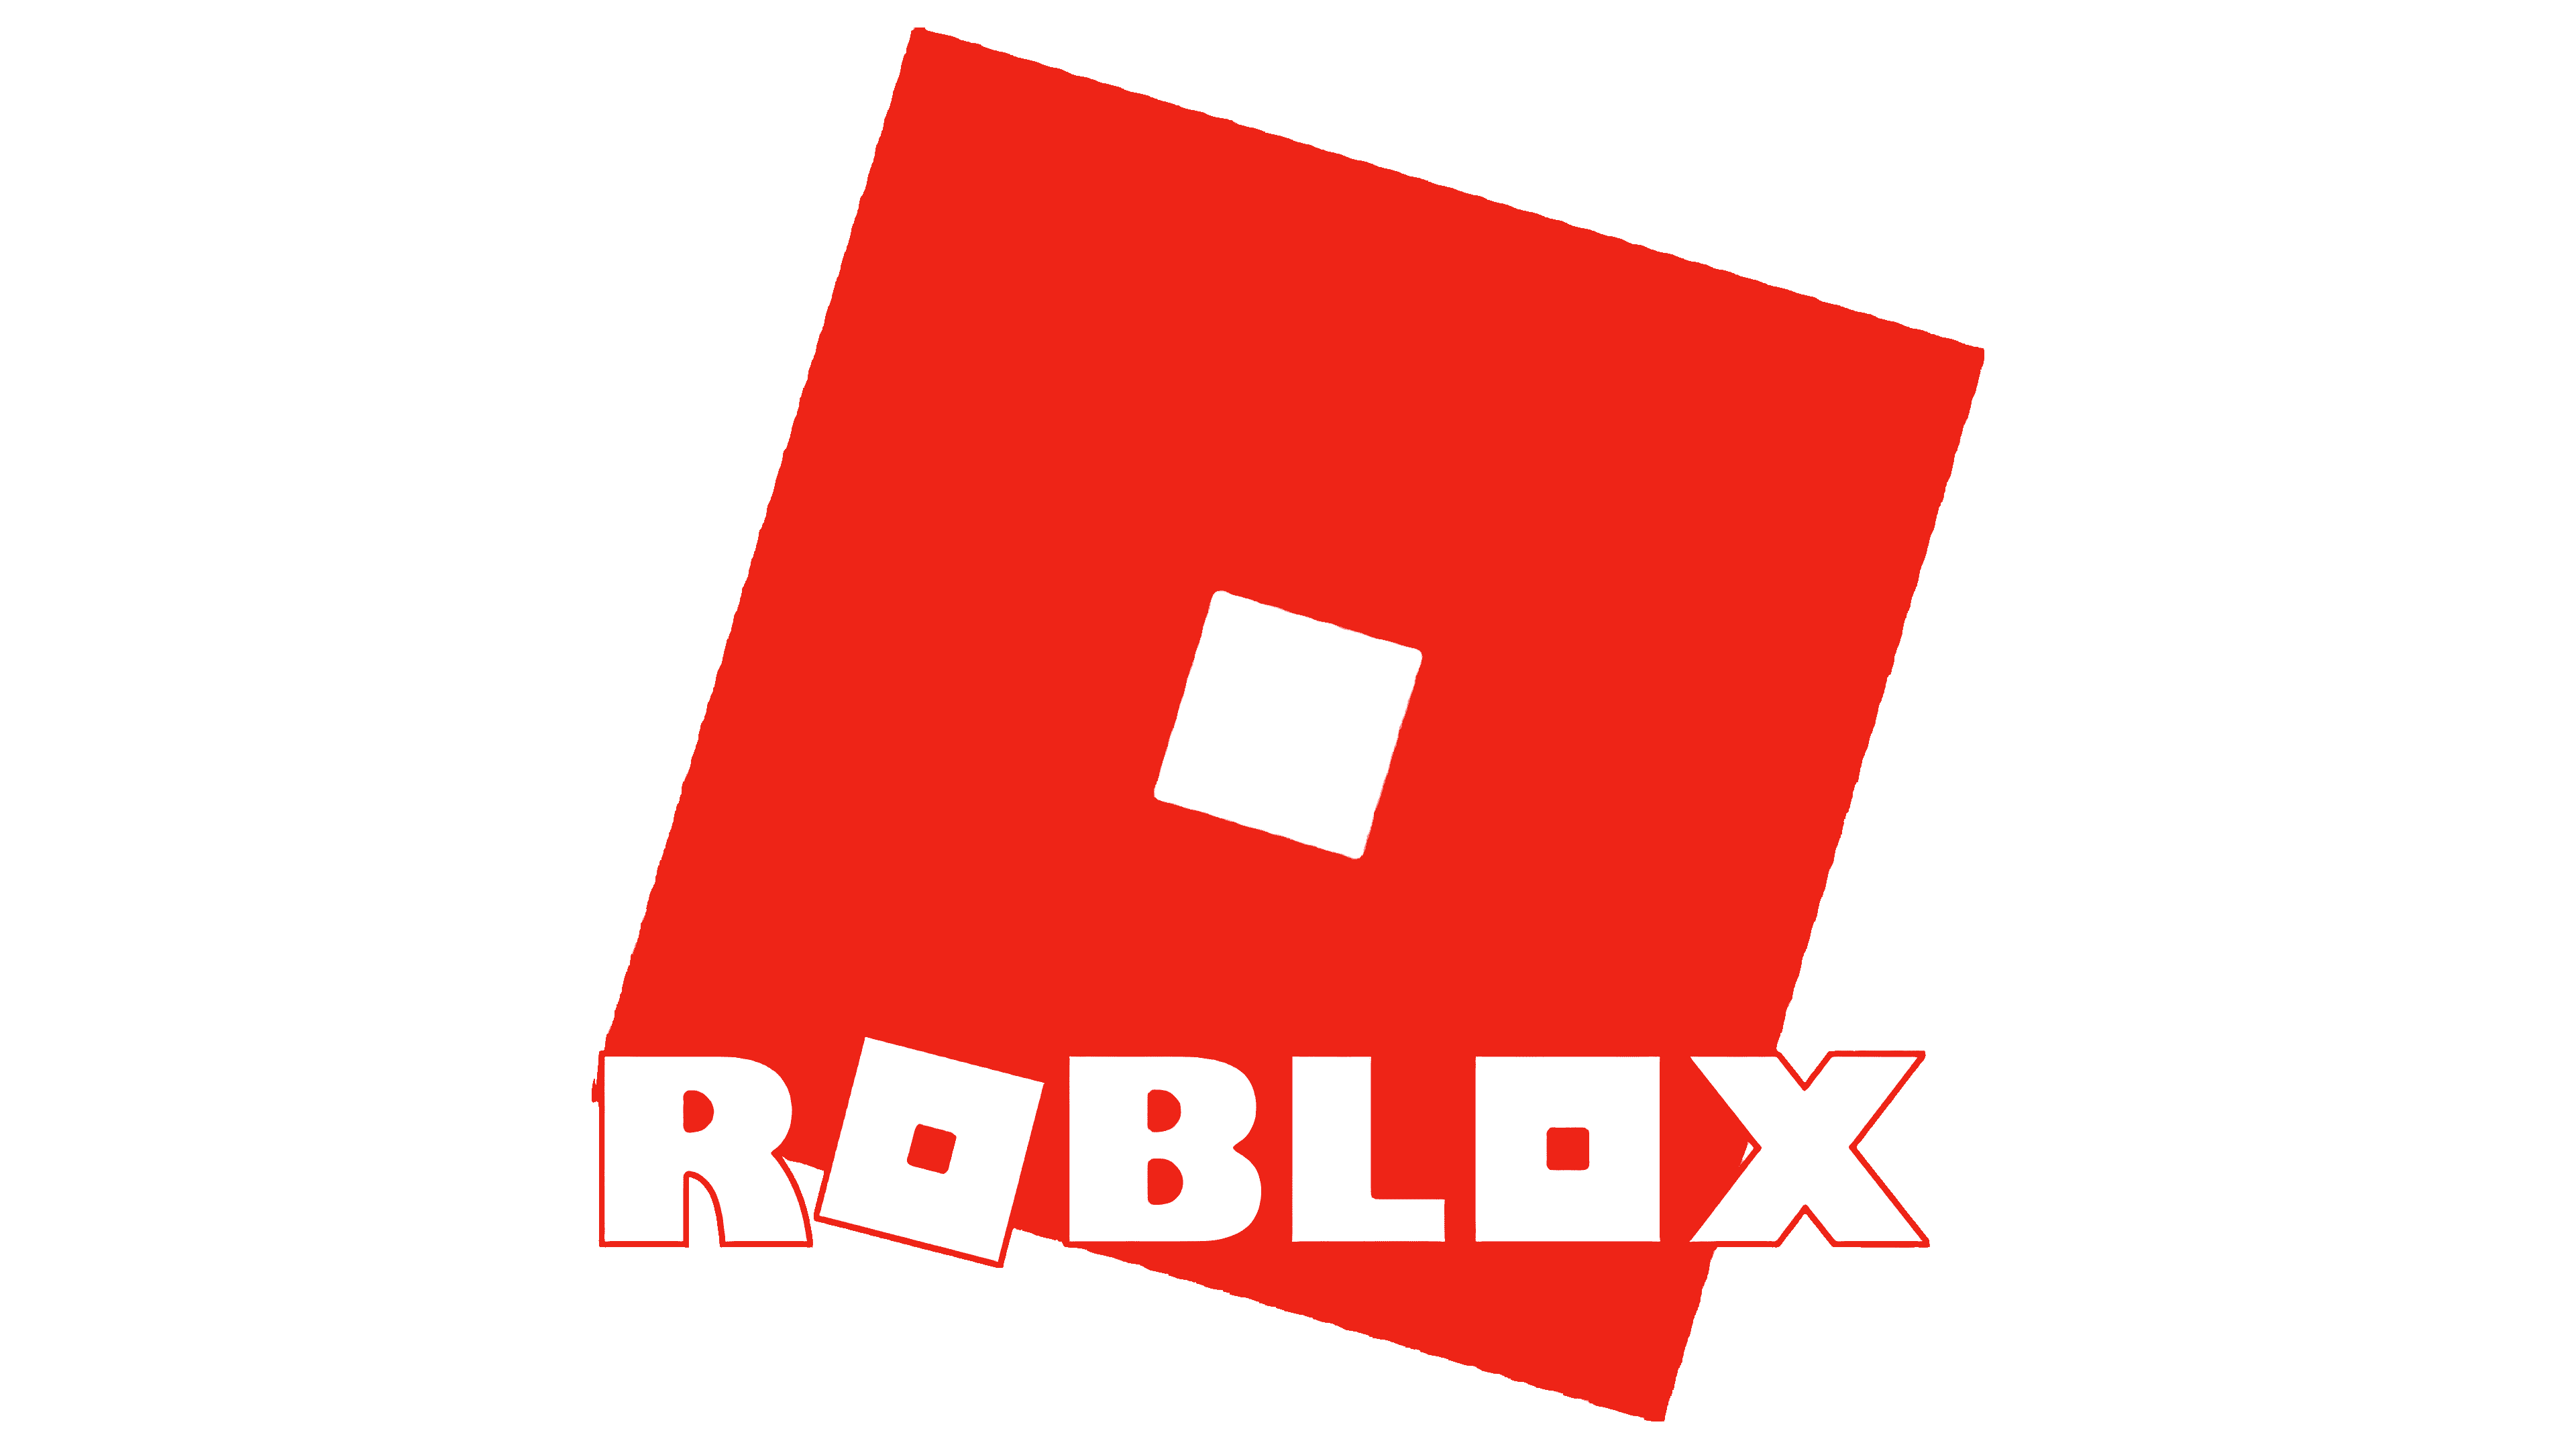 Roblox logo png. Roblox логотип. РОБЛОКС надпись. РОБЛОКС ярлык. РОБЛОКС без фона.